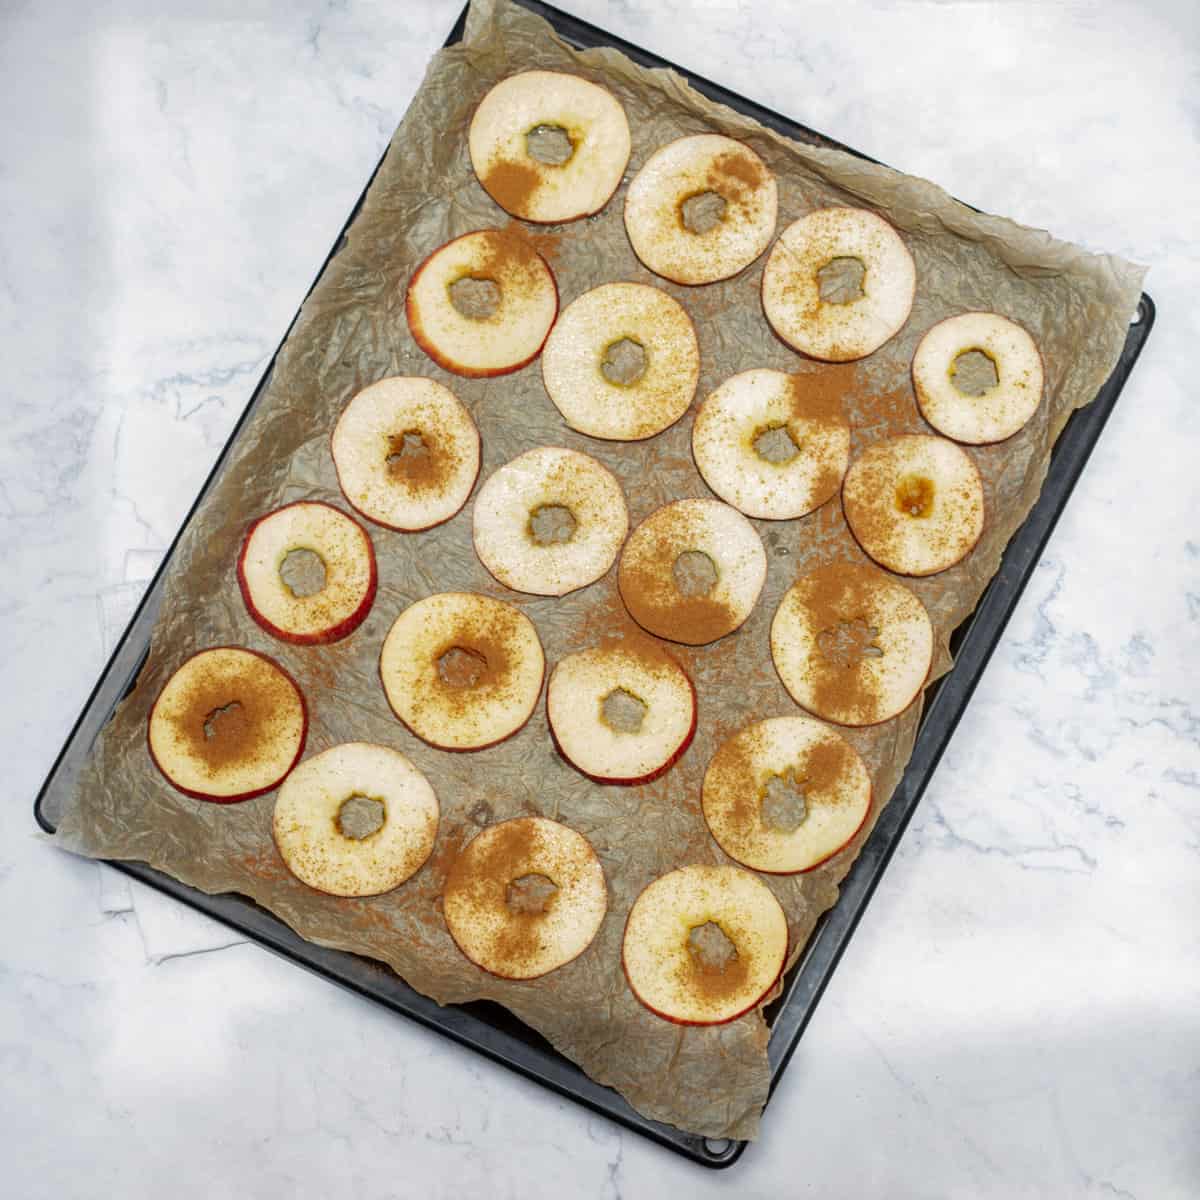 The seasoned apple slices arranged on a baking tray